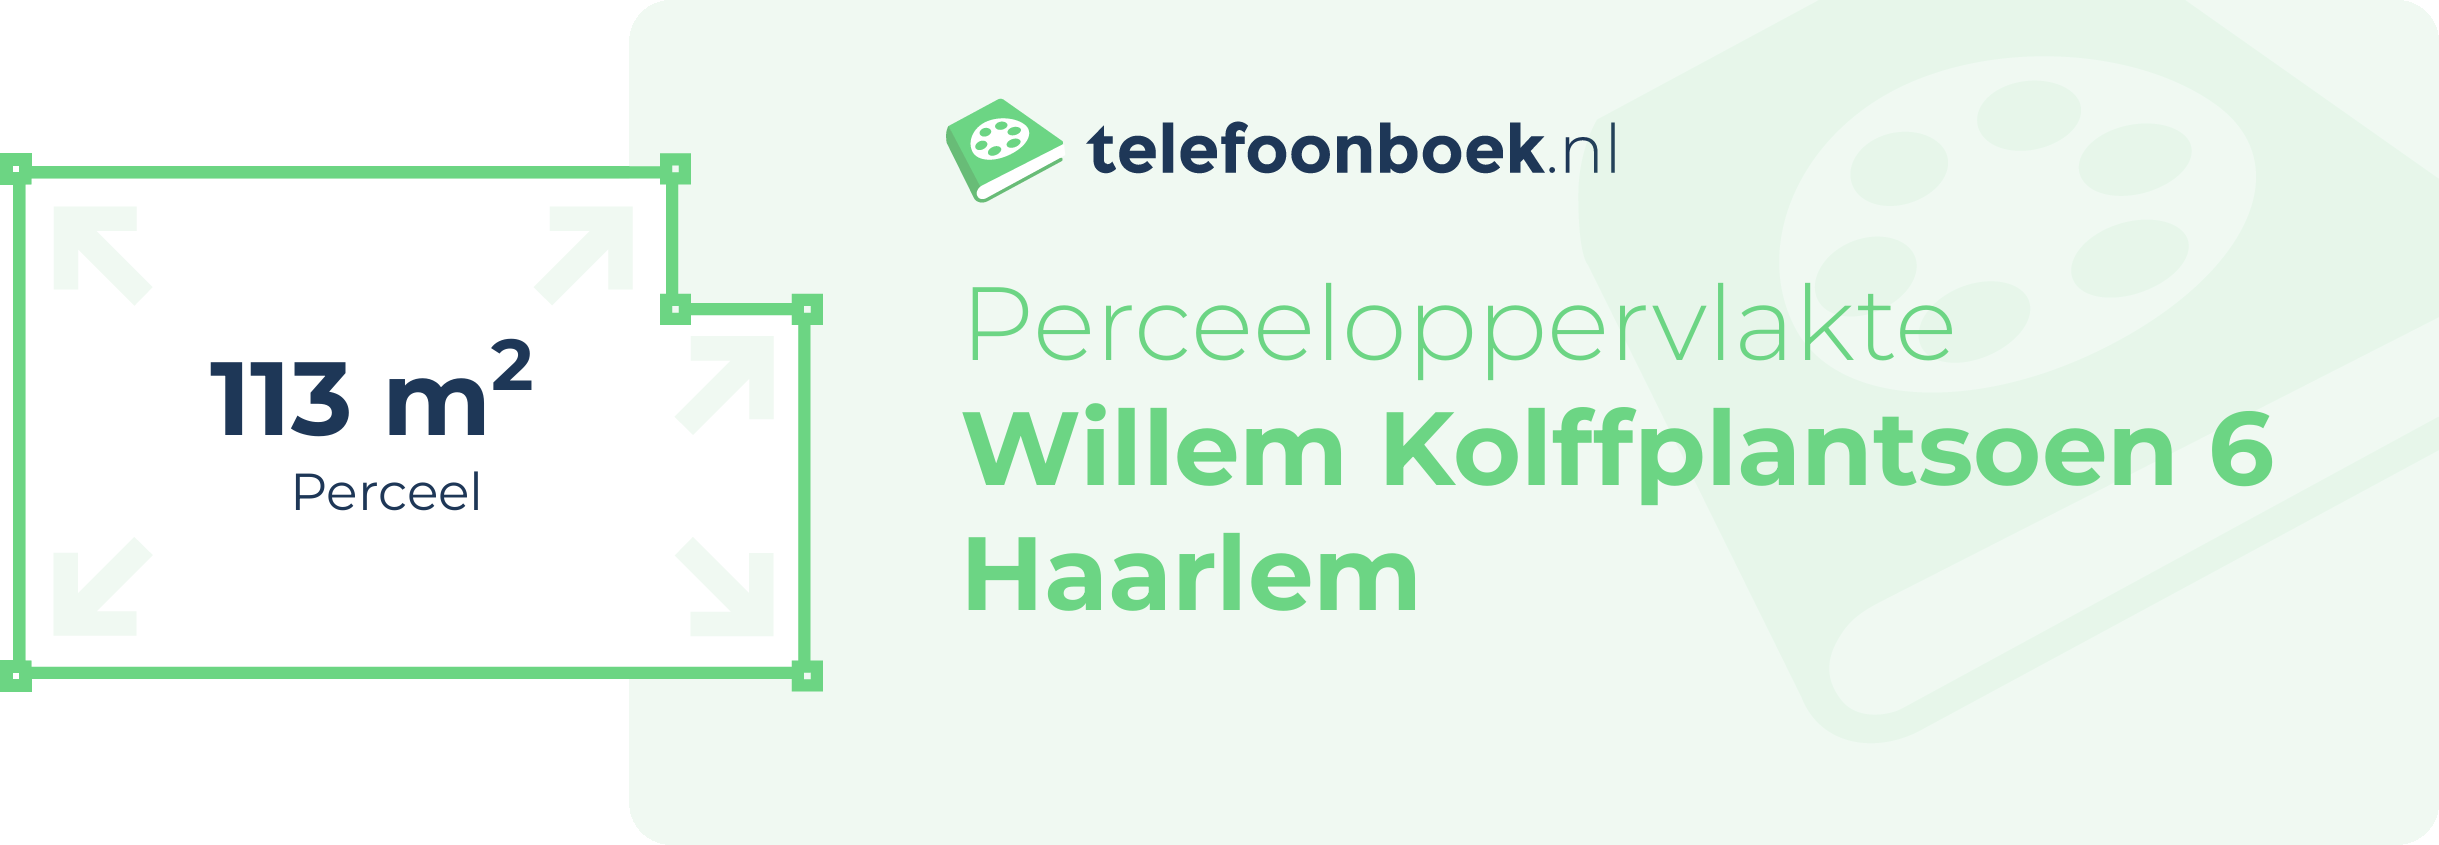 Perceeloppervlakte Willem Kolffplantsoen 6 Haarlem